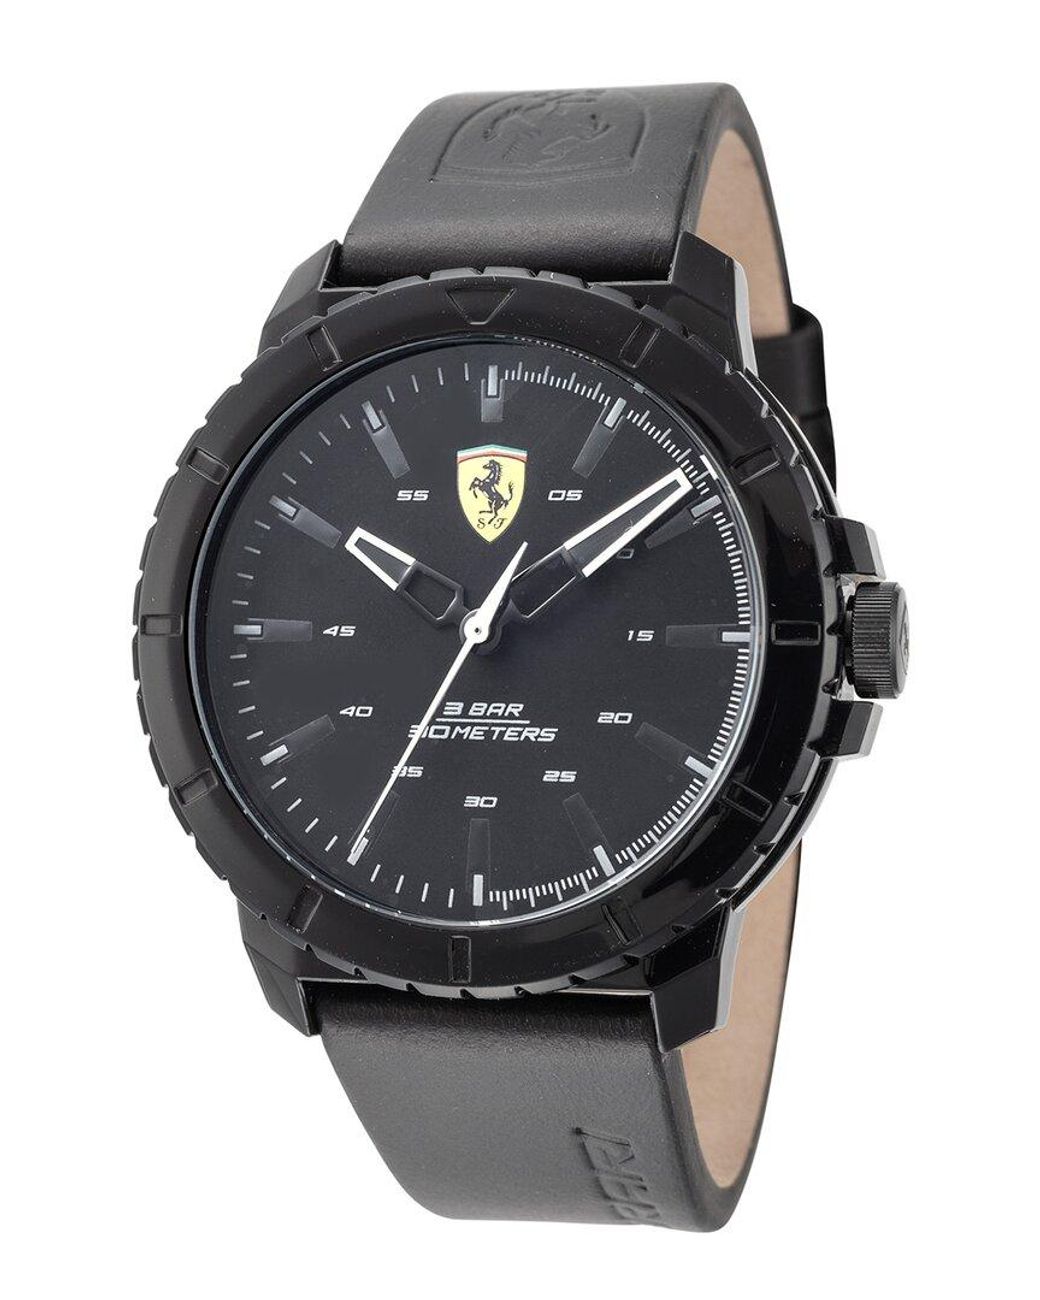 Scuderia Ferrari Men's Watch Gran Premio Chrono 0830188 - Crivelli Shopping-gemektower.com.vn